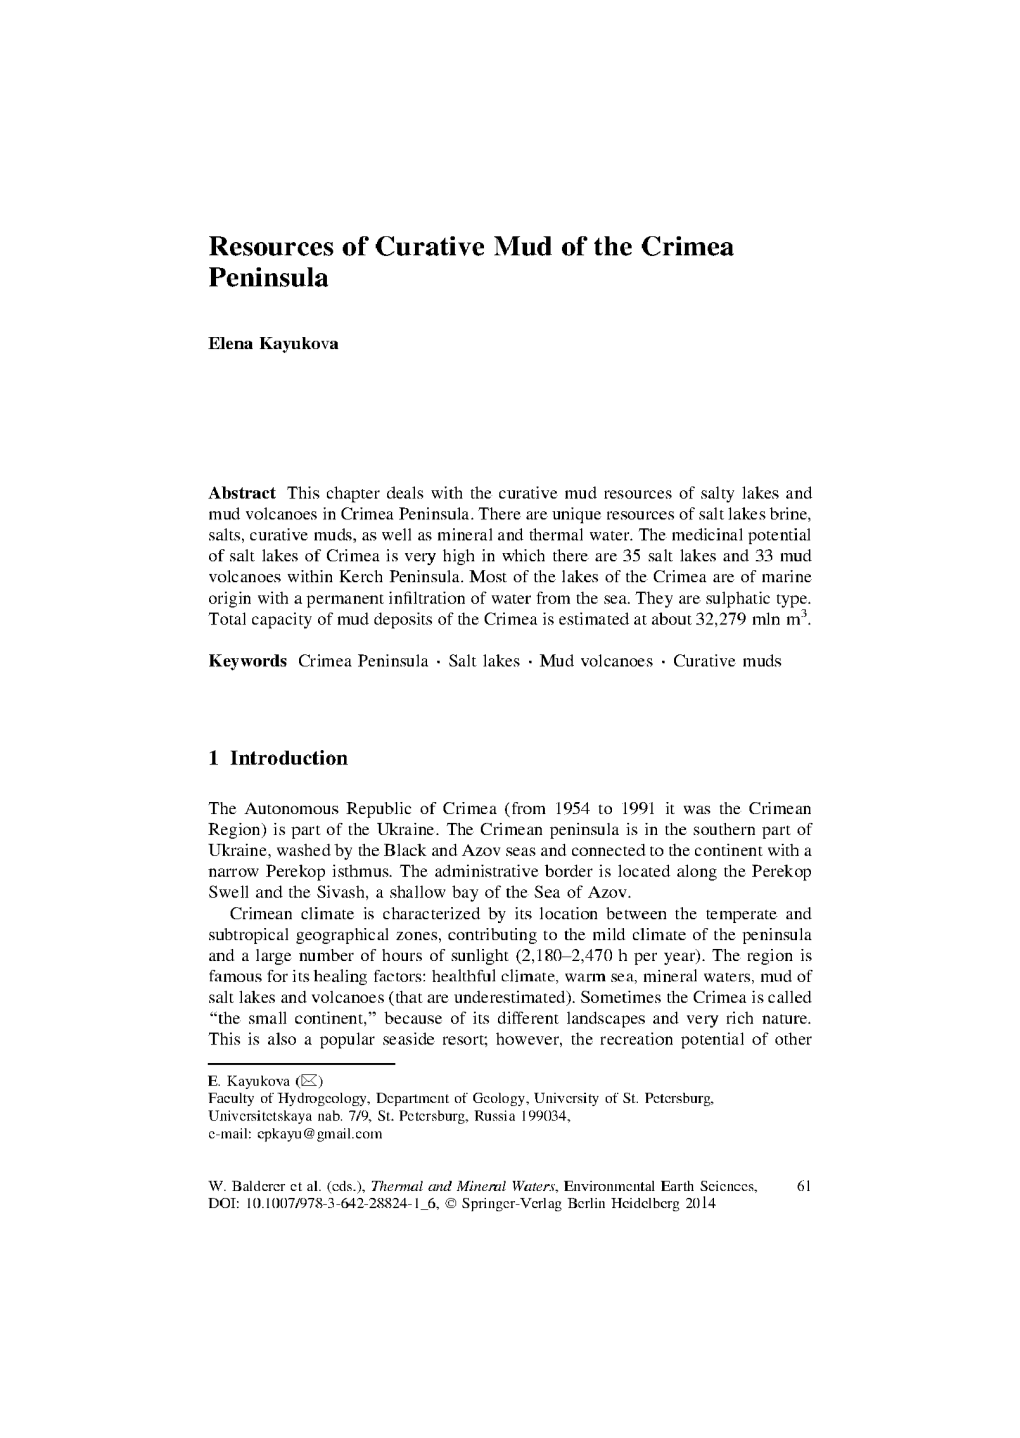 Resources of Curative Mud of the Crimea Peninsula